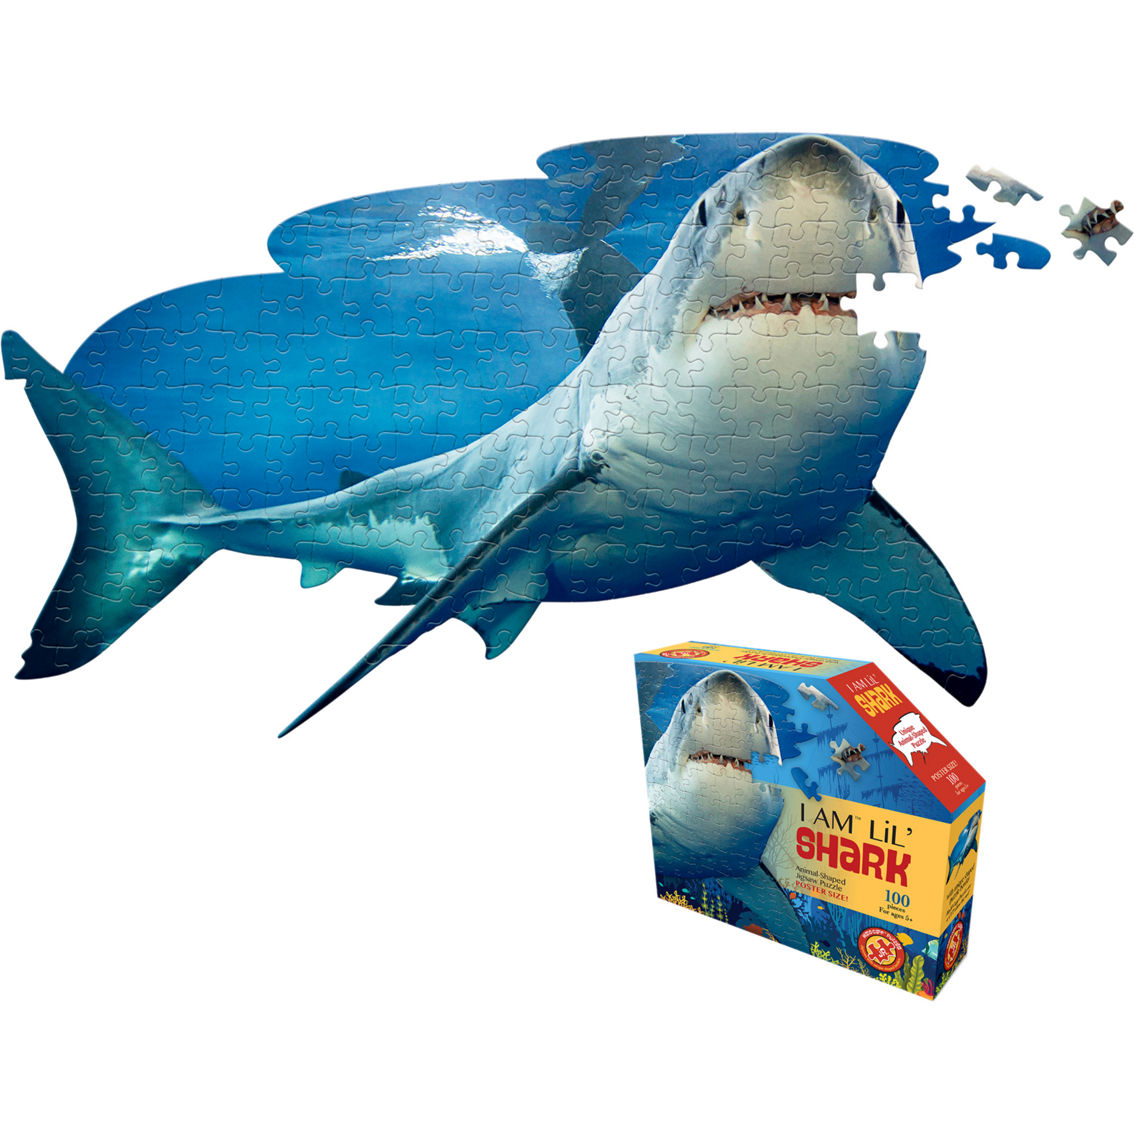 Madd Capp Jr. I Am Lil' Shark 100 pc. Puzzle - Image 2 of 3